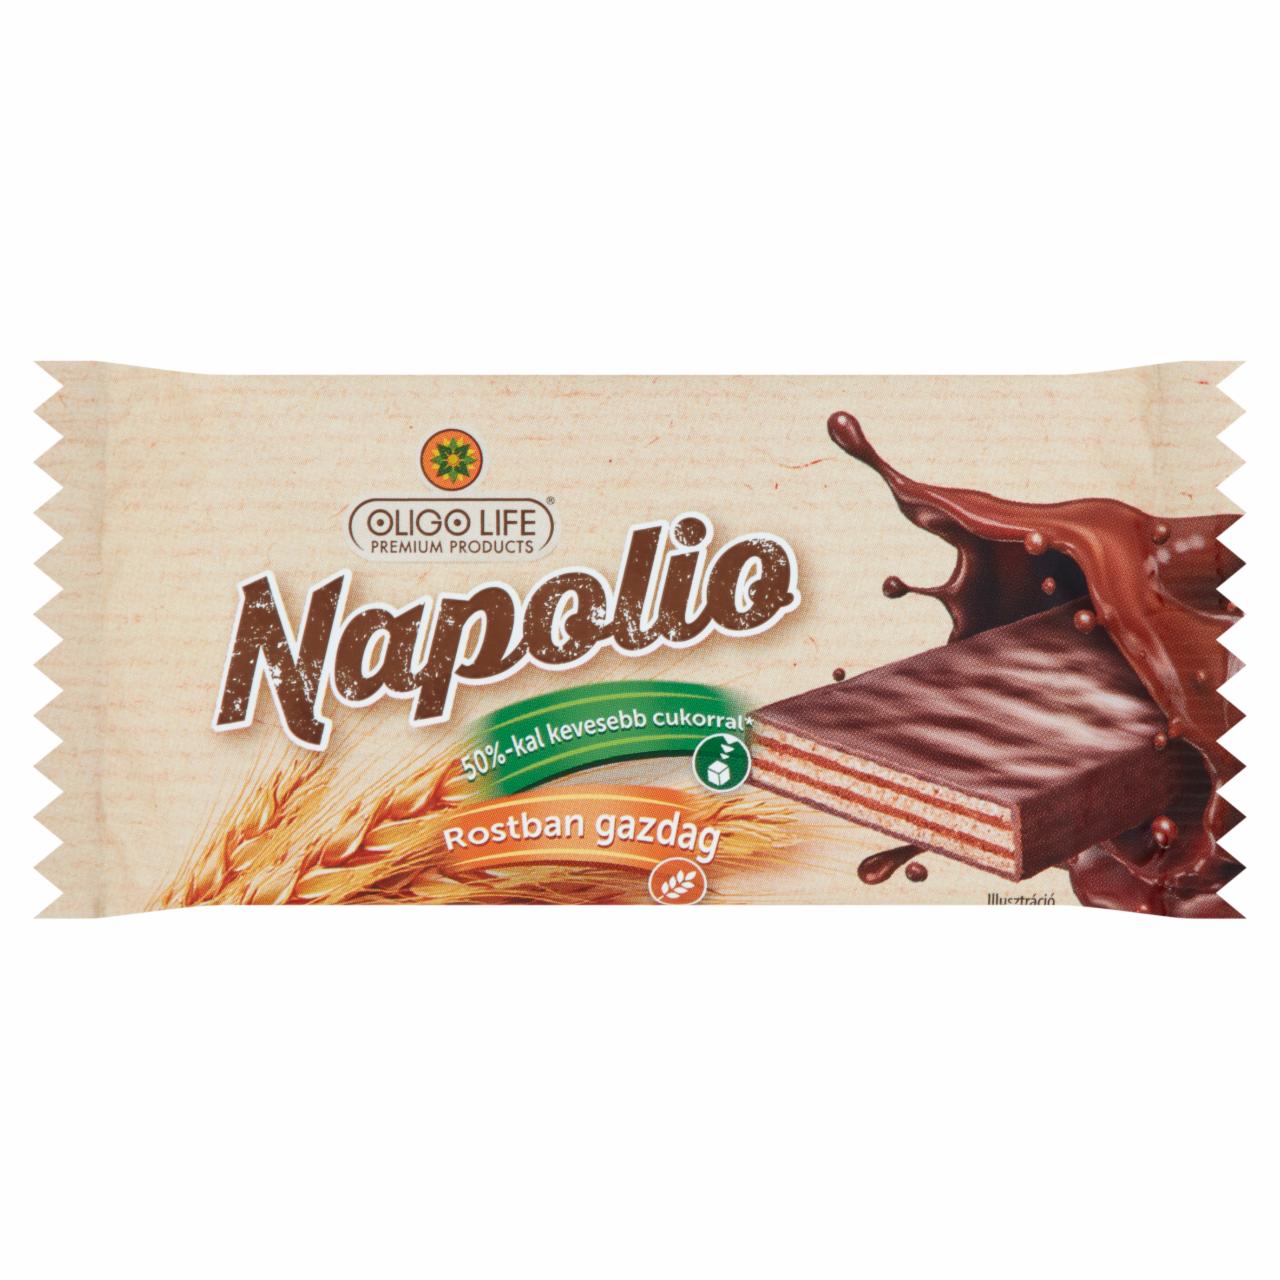 Képek - Oligo Life Napolio kakaós ostya 50%-kal kevesebb cukorral, rostban gazdag 30 g